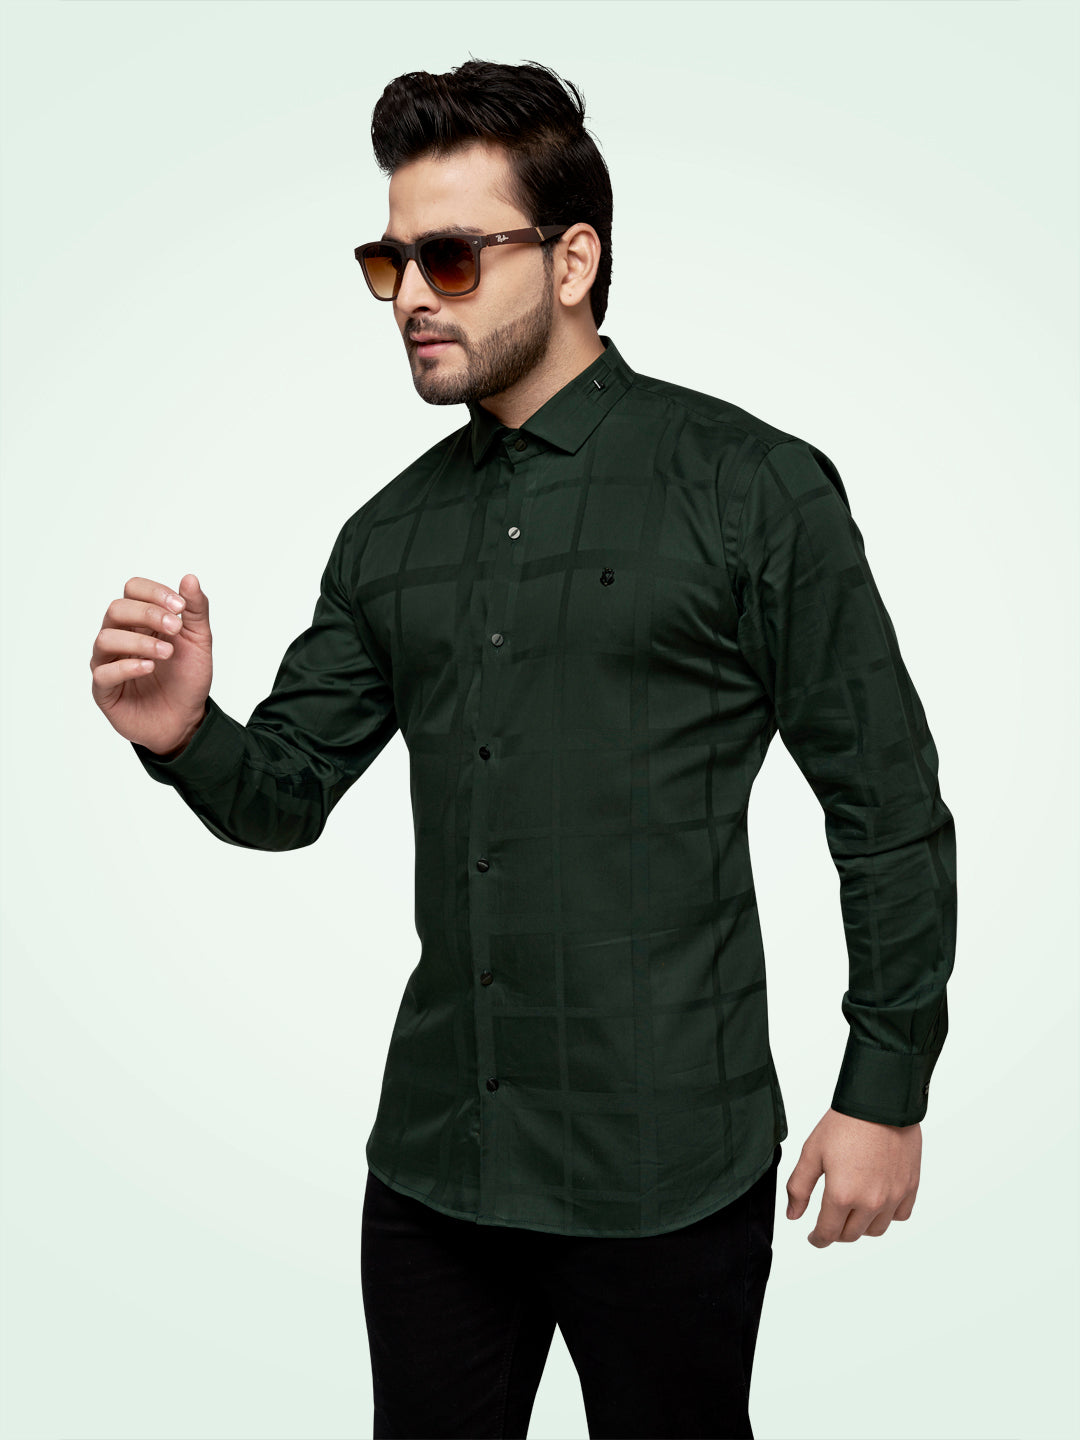 Black and White Self Checks Cocktail Shirt- Premium 60s CountsSelf Checks Cocktail Shirt- Premium 60s Counts Green